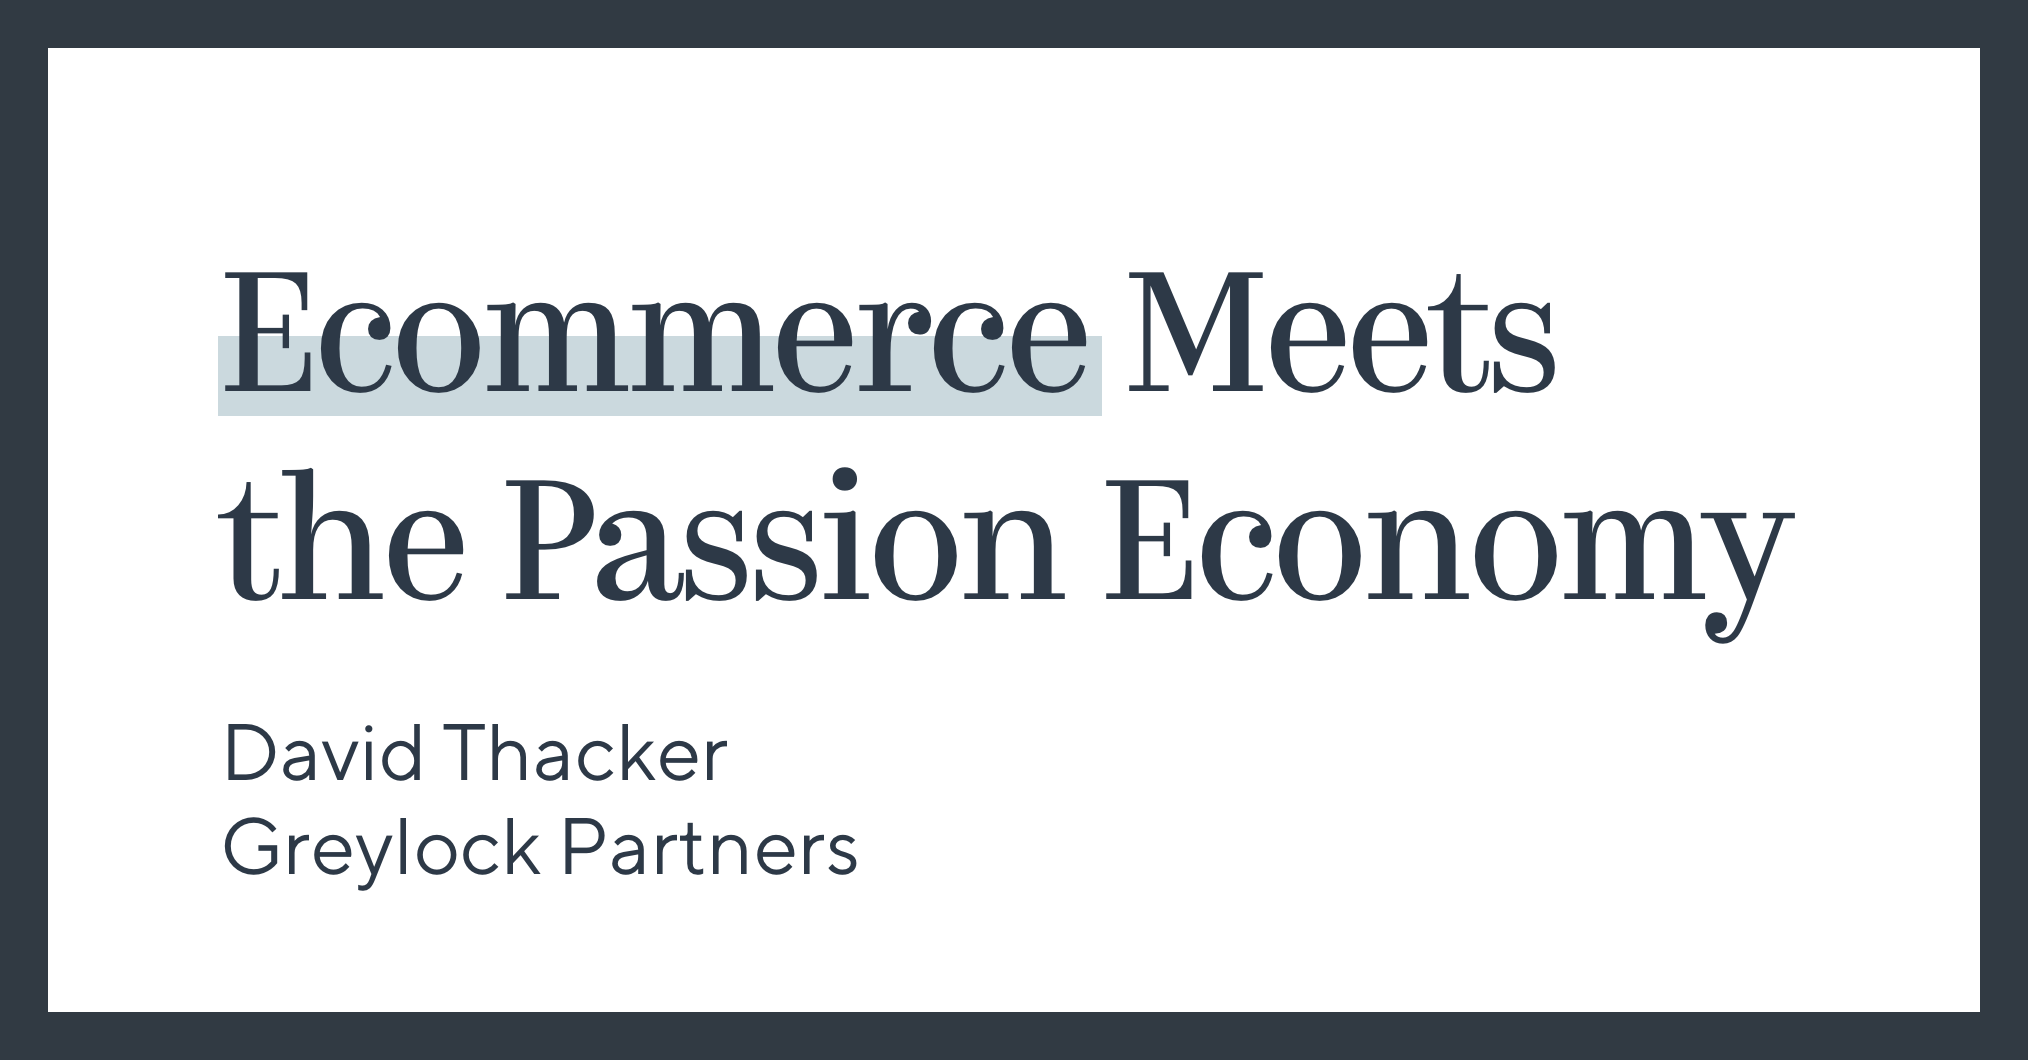 Ecommerce Meets the Passion Economy